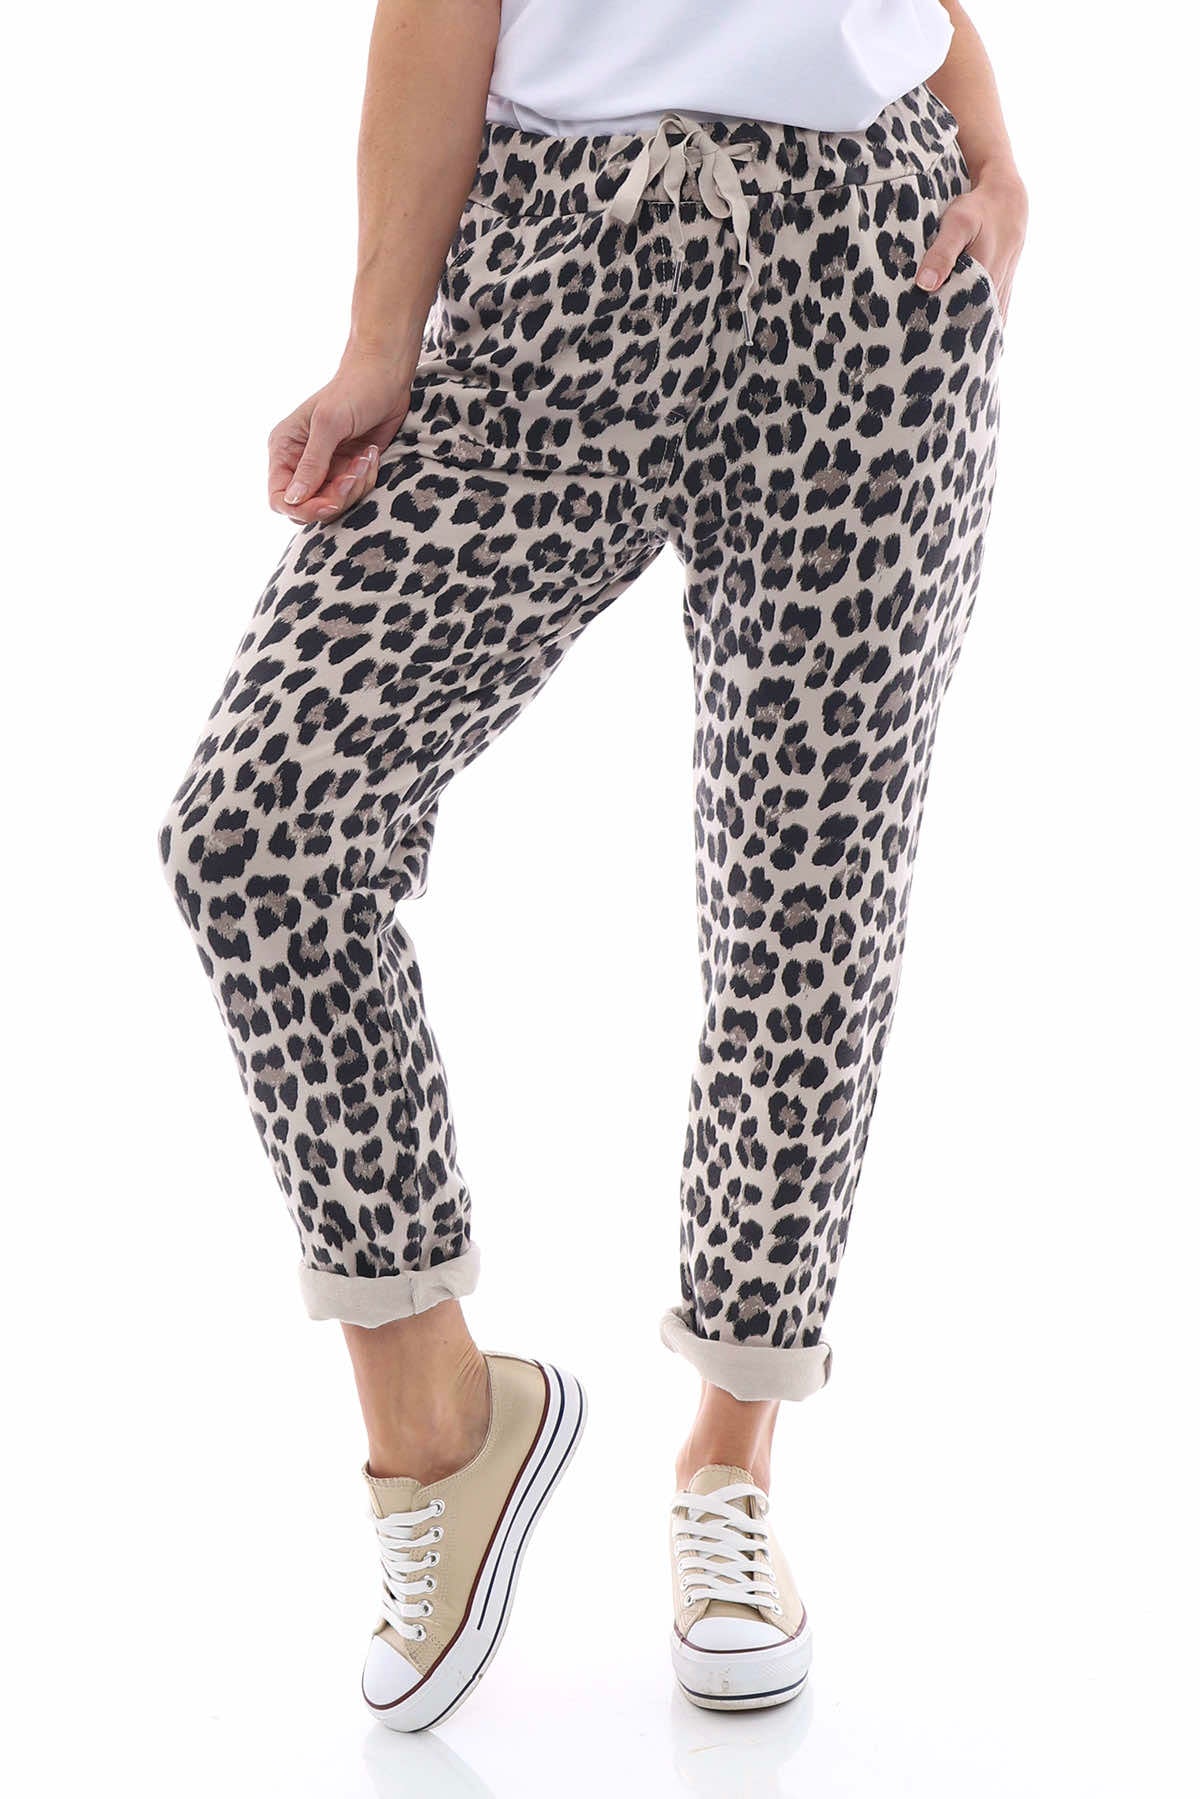 Minskip Leopard Print Jersey Pants Stone